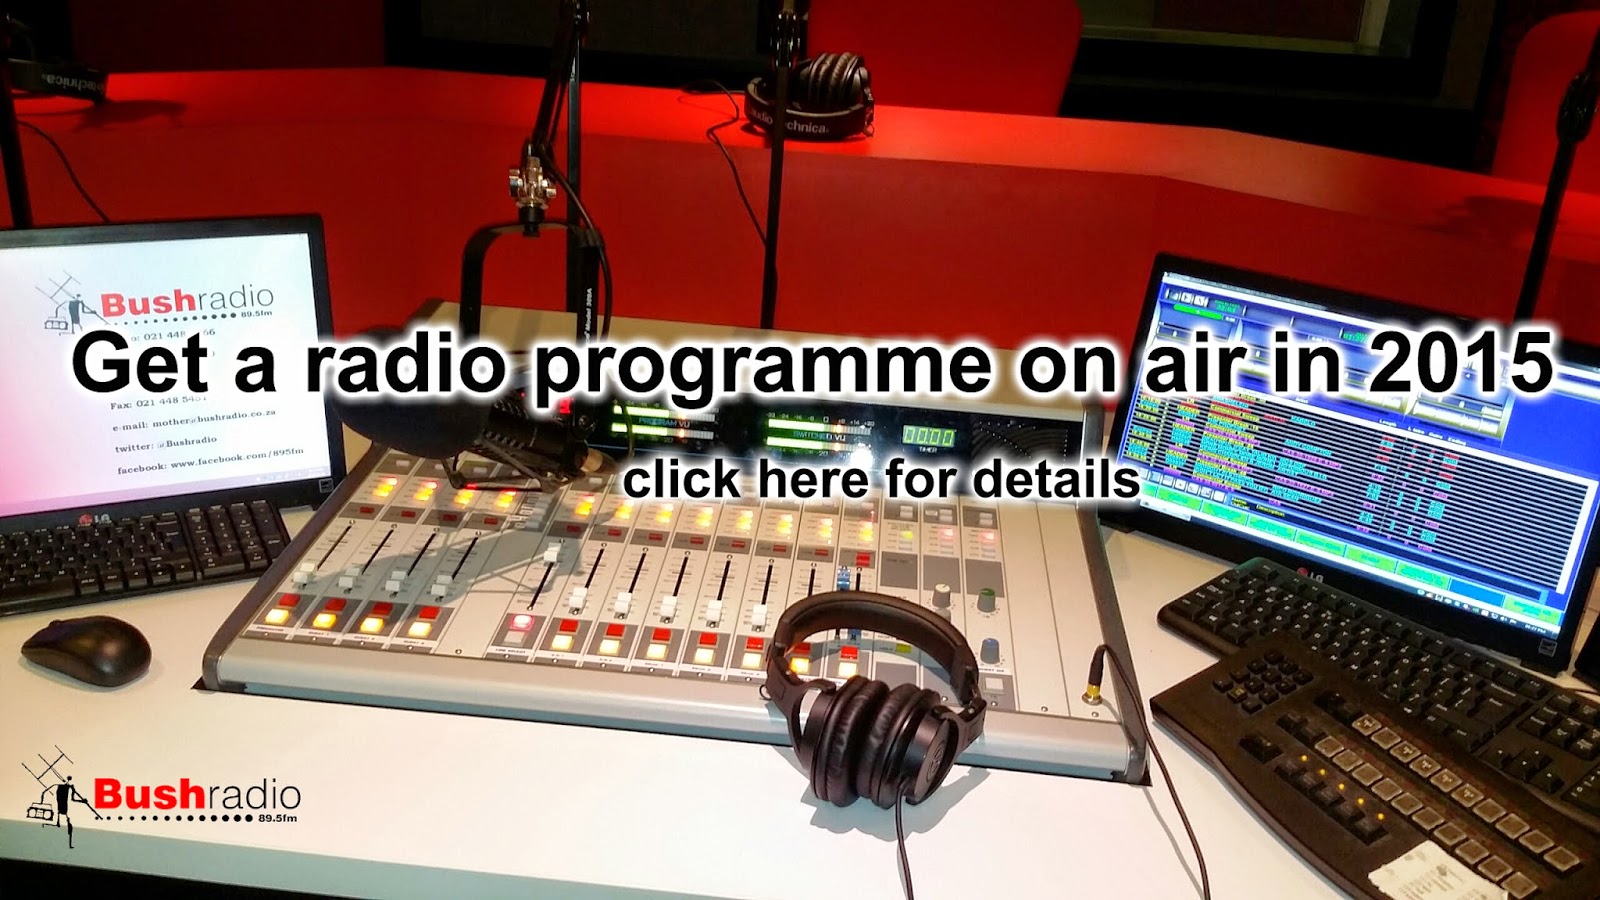 https://bushradio.wordpress.com/2015/01/09/get-a-radio-programme-on-air-in-2015/